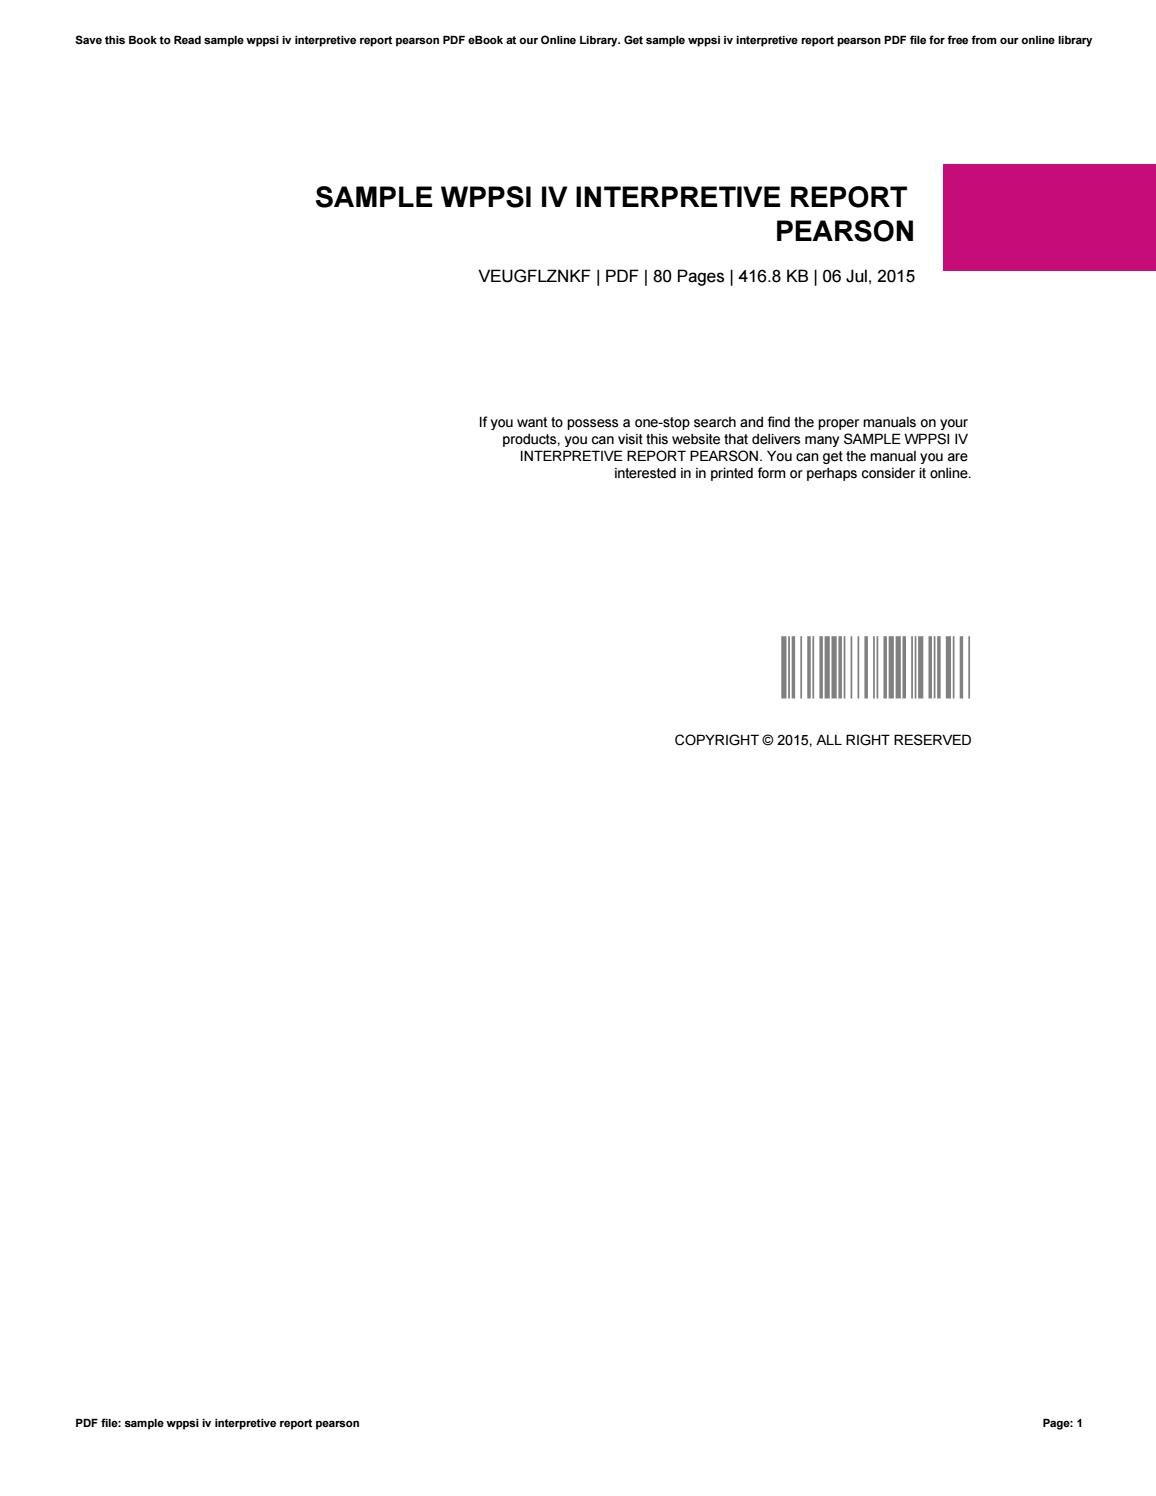 Sample Wppsi Iv Interpretive Report Pearsonsusandement  Issuu pertaining to Wppsi Iv Report Template